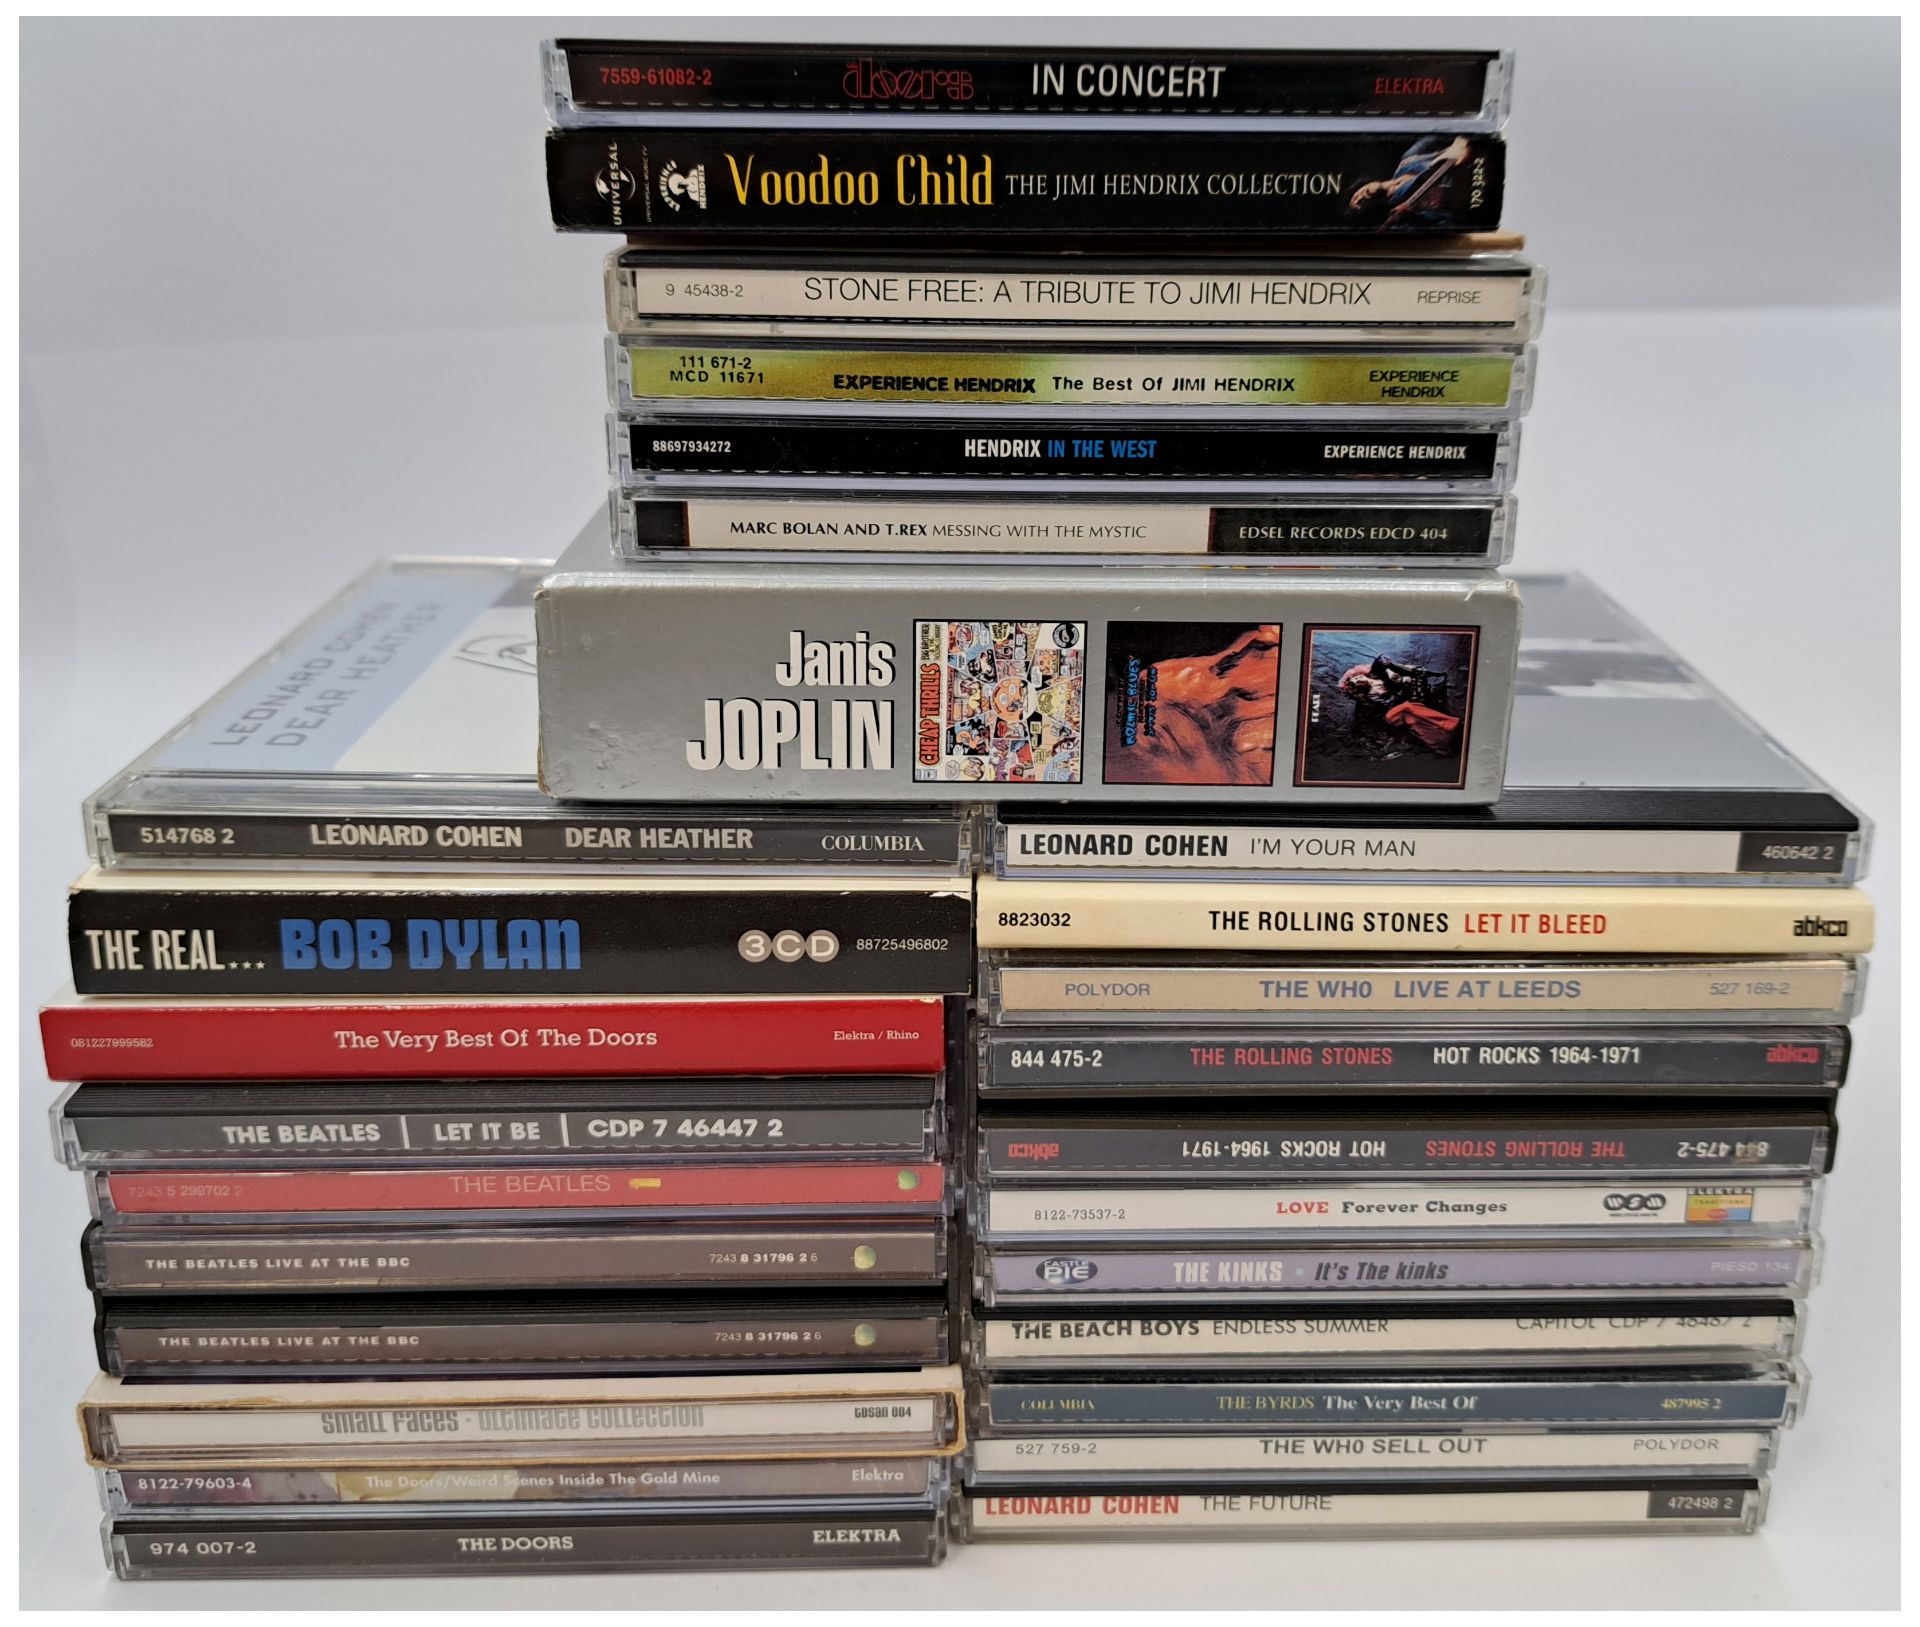 Classic Rock/Folk Rock - A Group of CDs